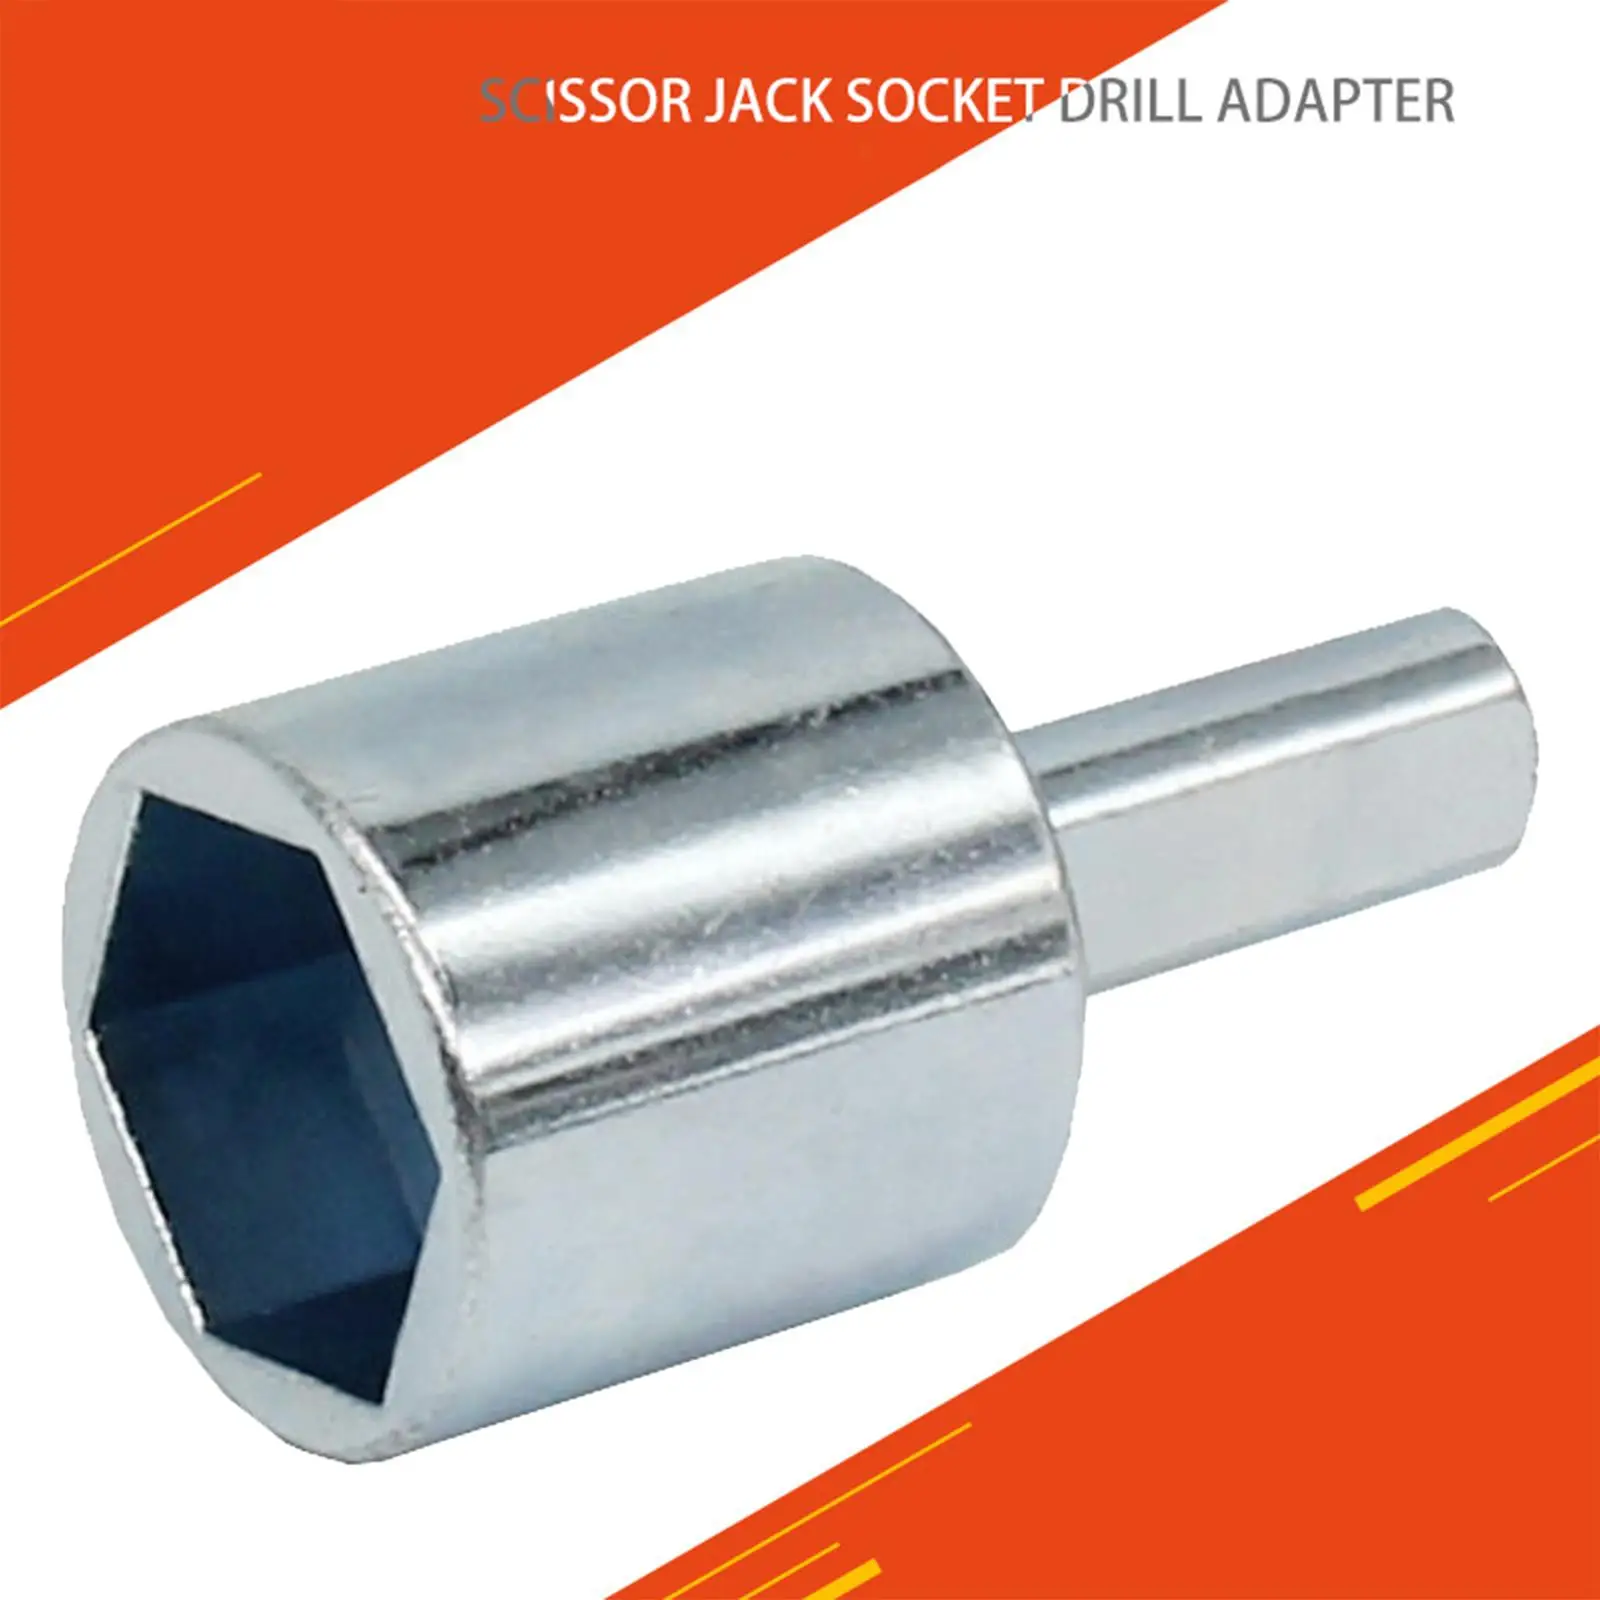 Power RV Leveling Scissor Jack Socket Drill Adapter Carbon Steel Socket Drill Adapter Raise Lower Scissor Jacks Reduces Time